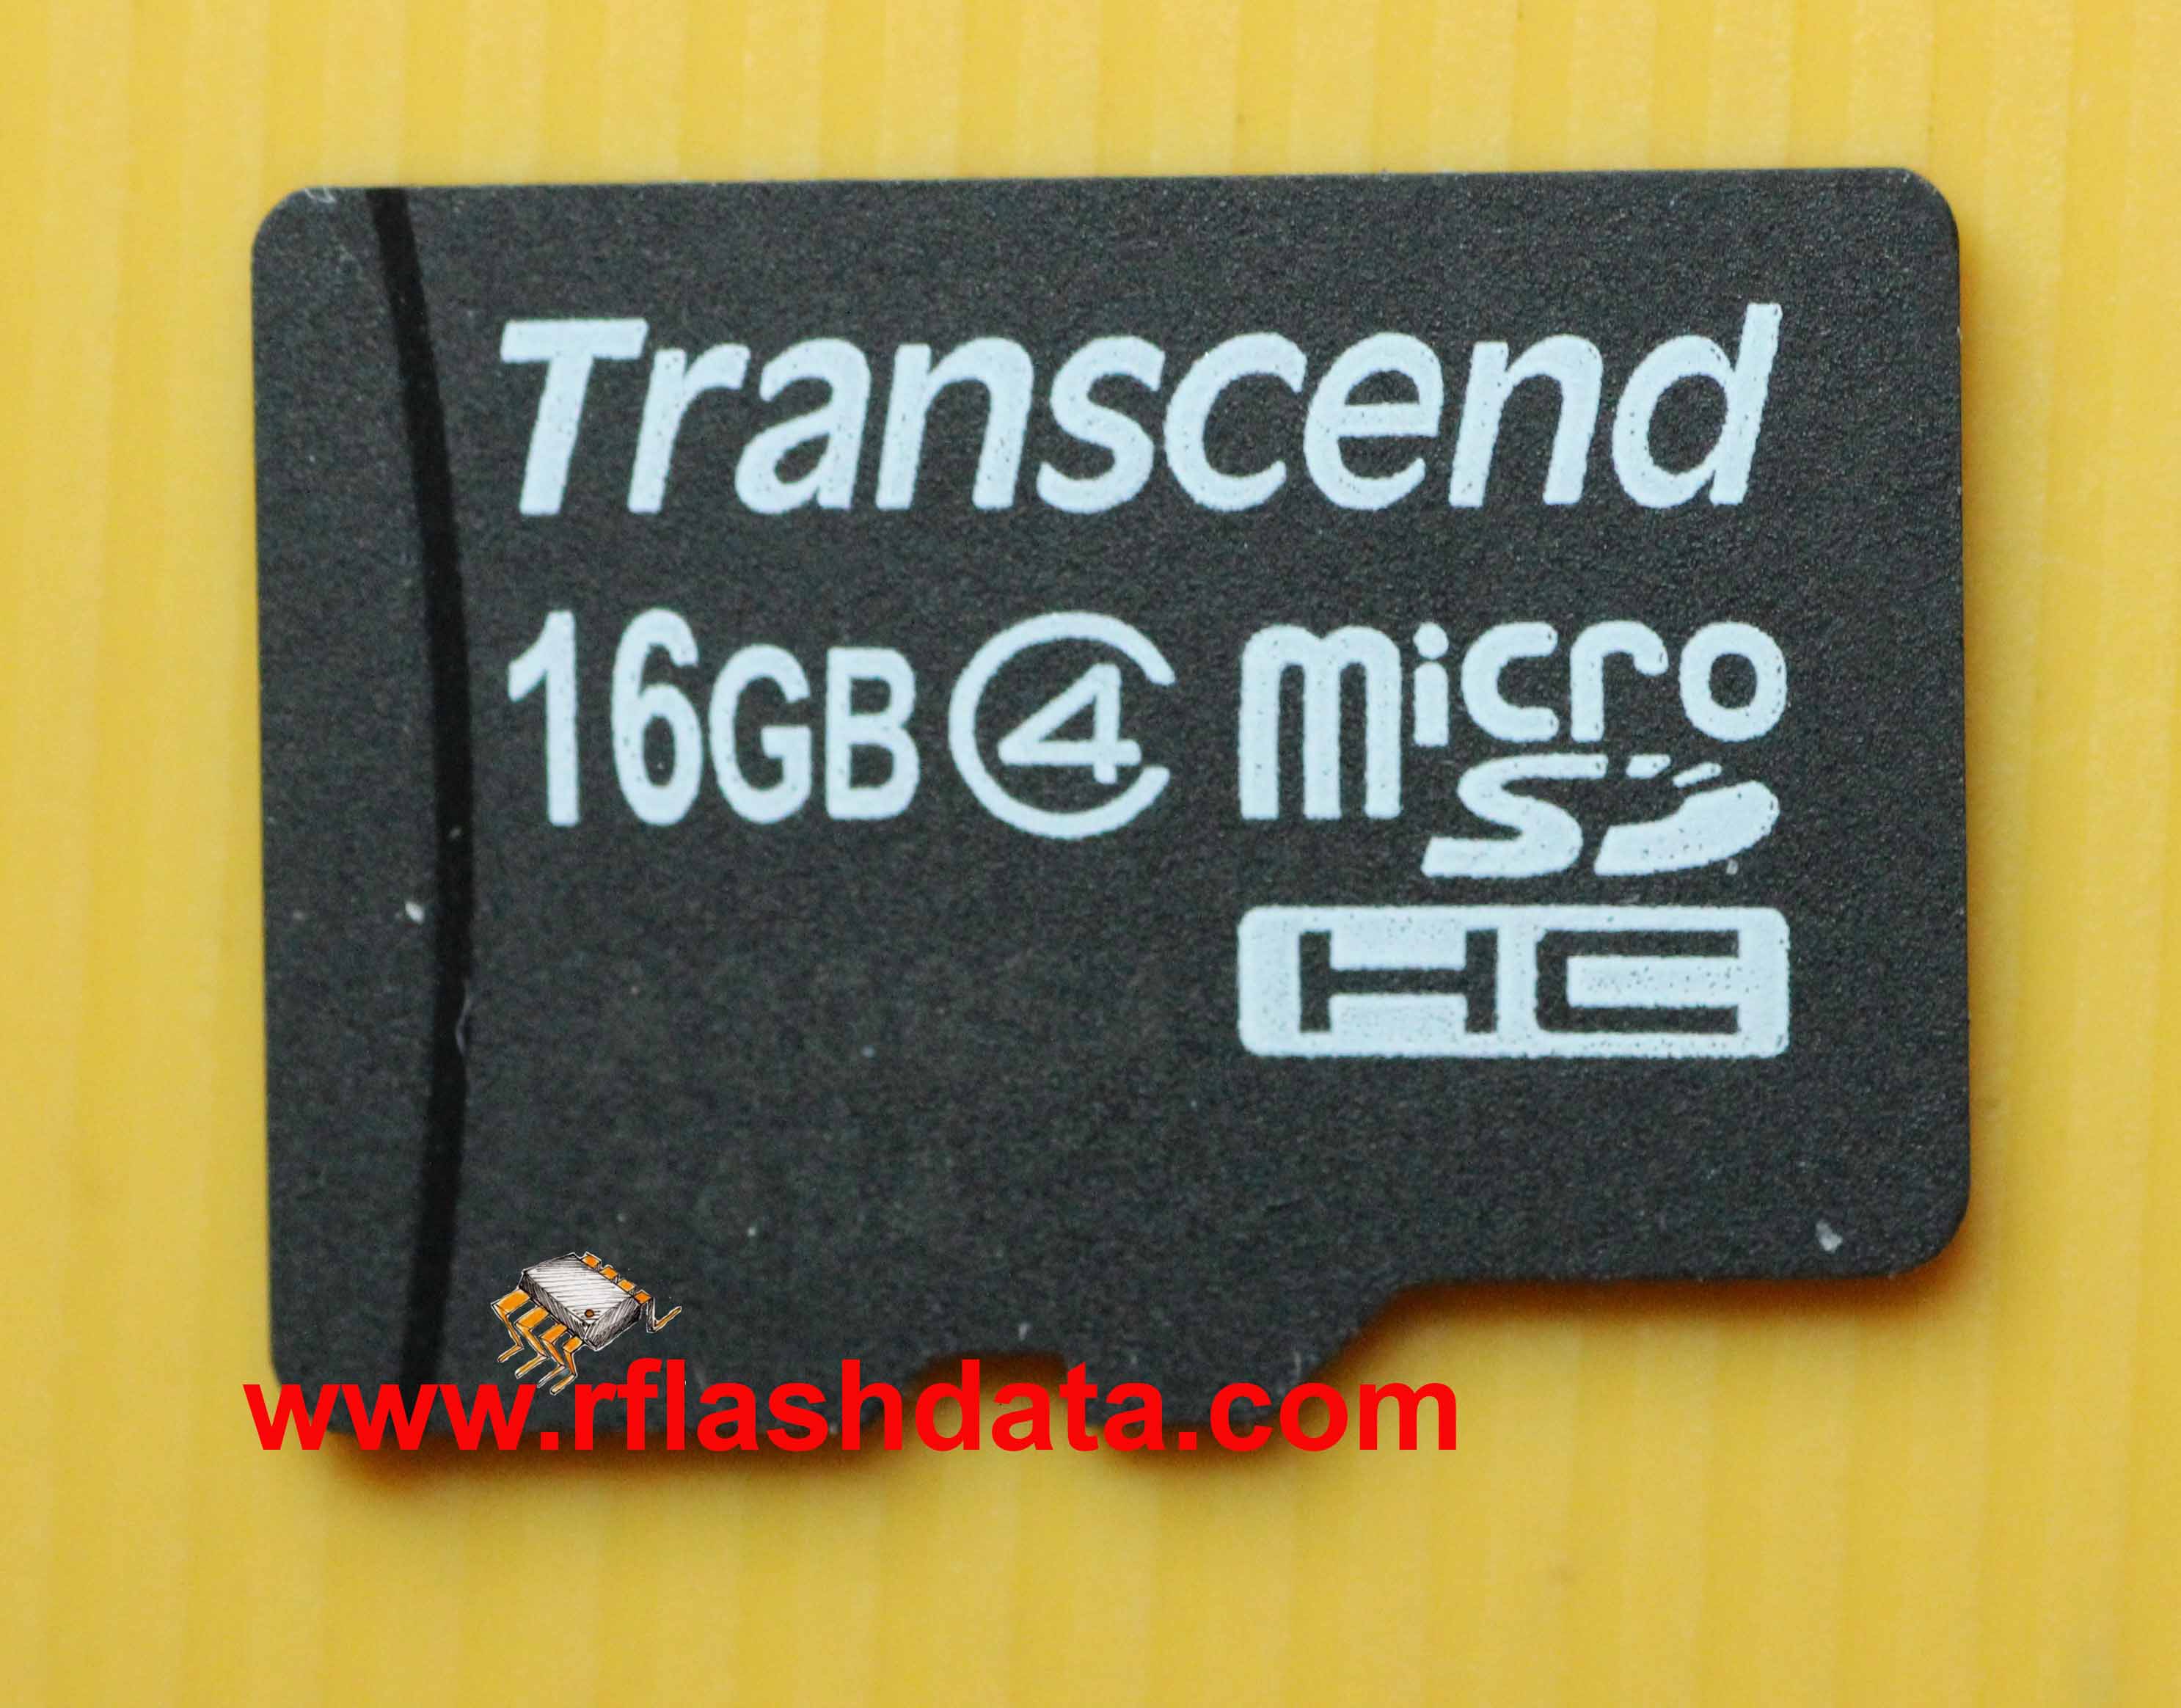 Transcend microSD recovery